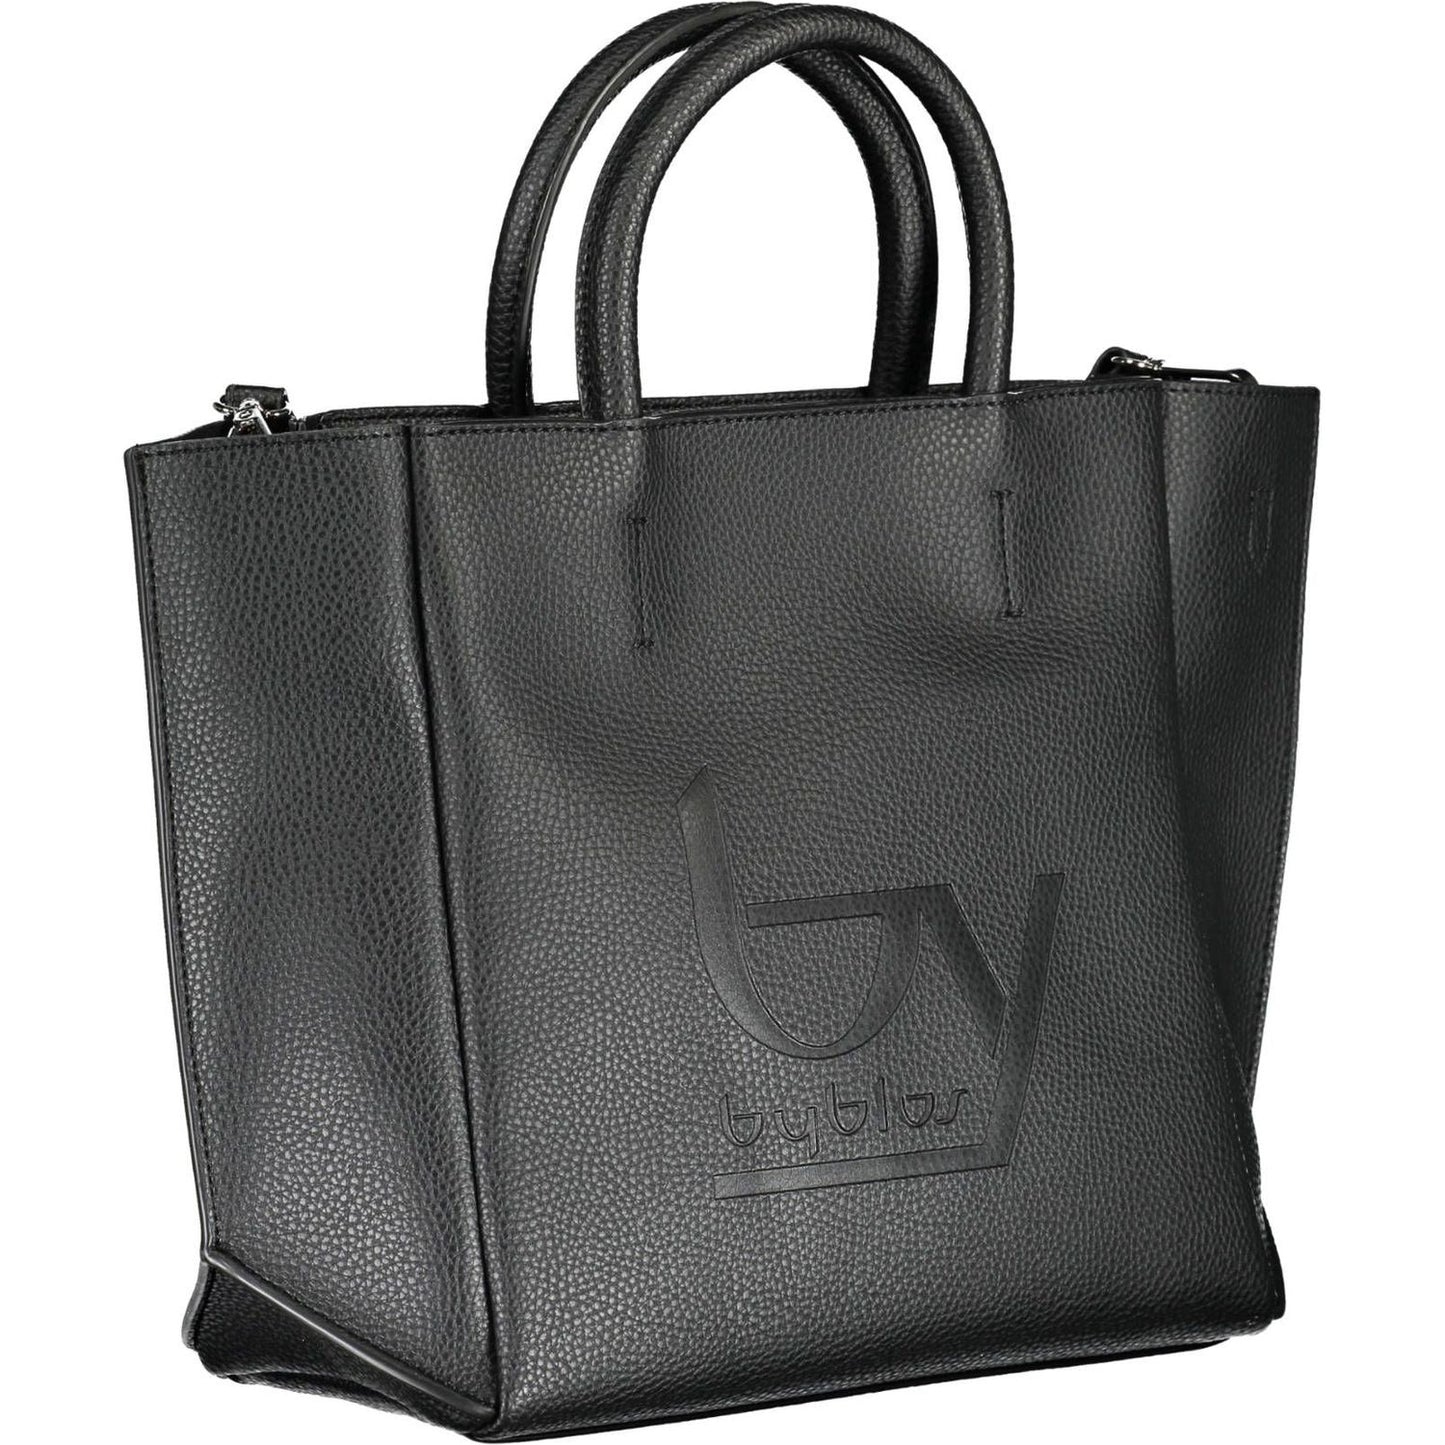 BYBLOS Elegant Black Handbag with Chic Print elegant-black-handbag-with-chic-print